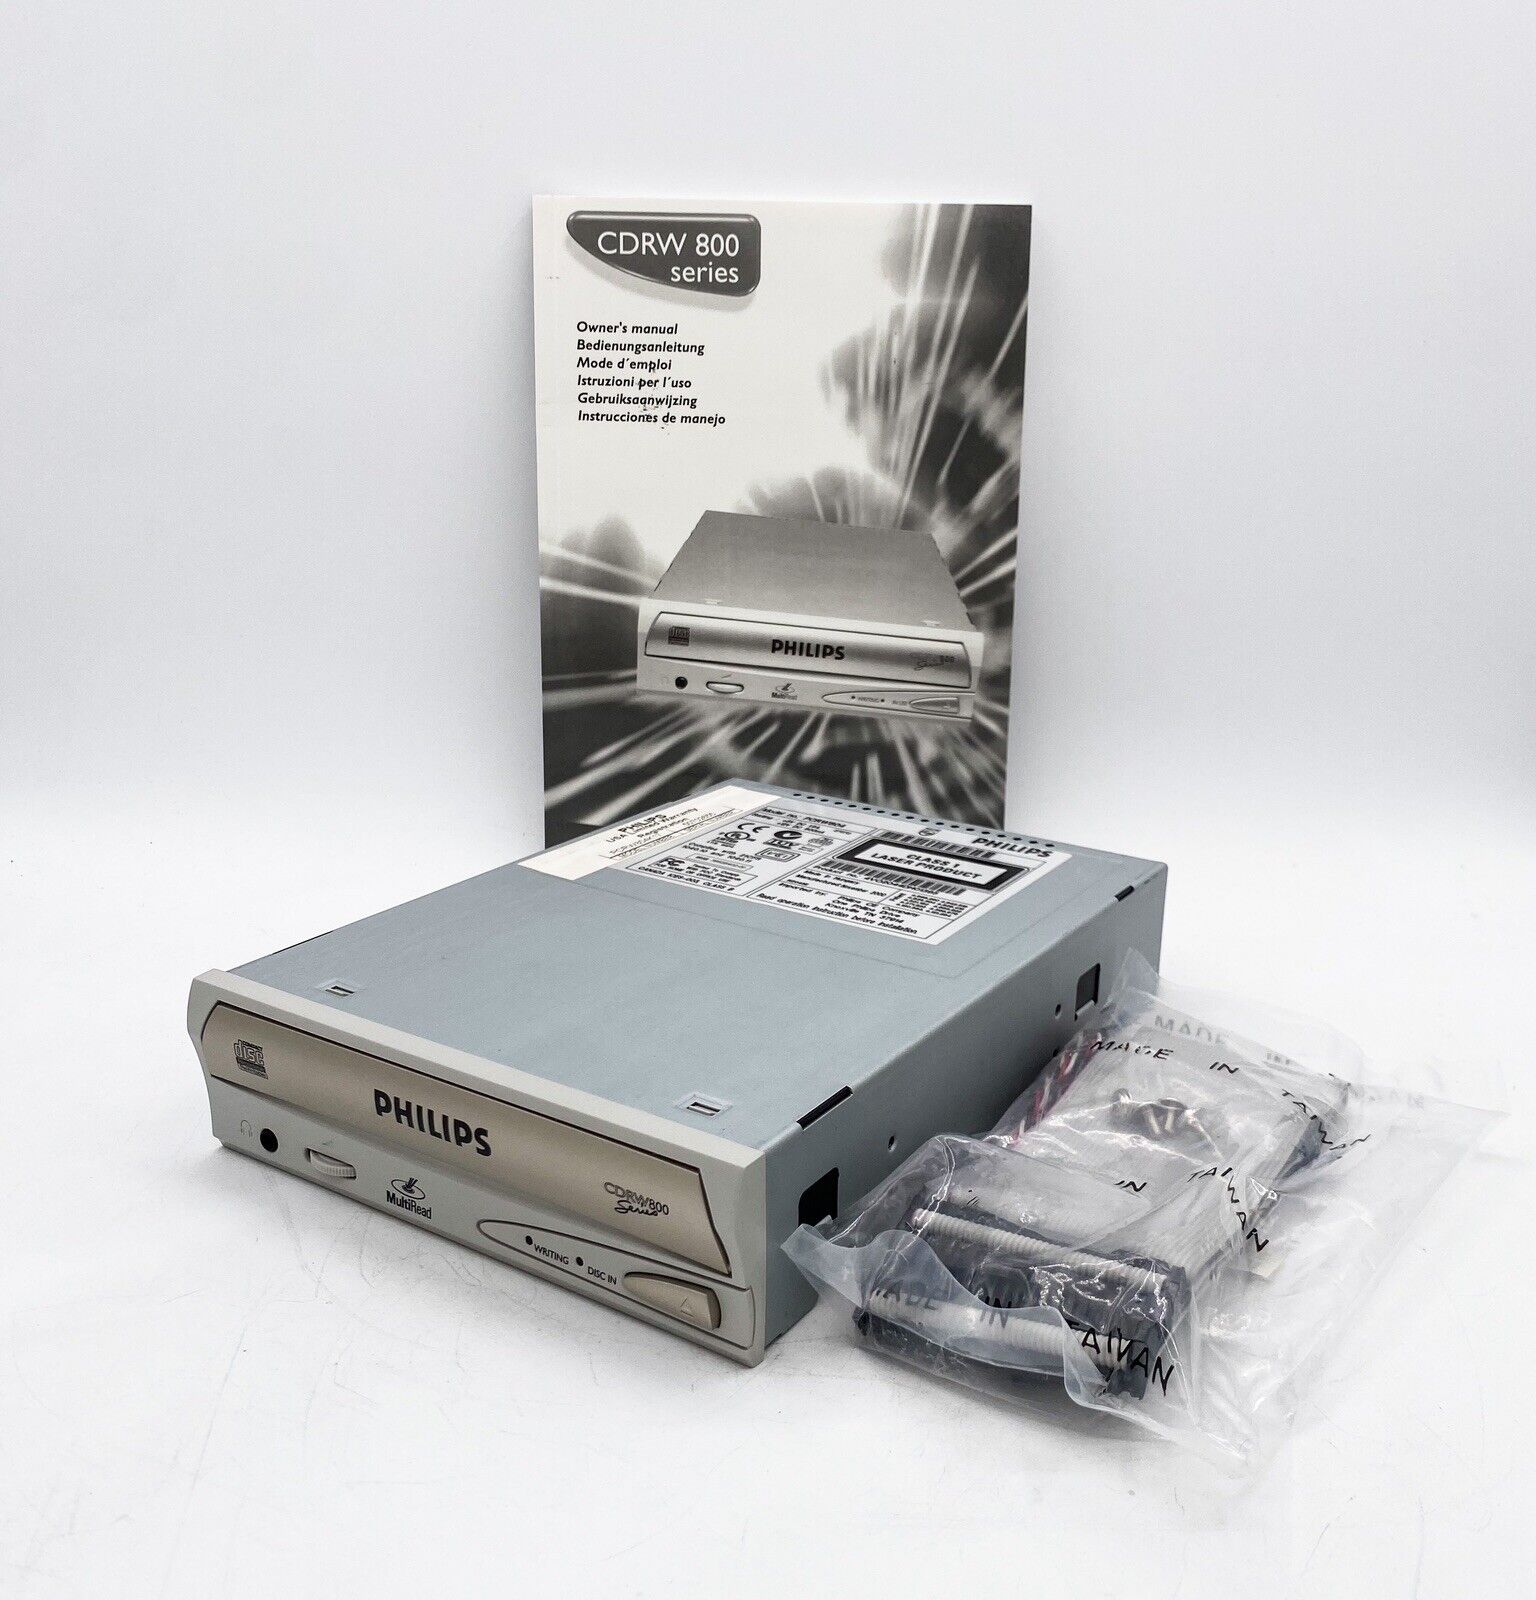 Vintage Philips PCRW804 IDE Internal 8x/4x/32x CD-RW Drive CDROM w Manual, Wires